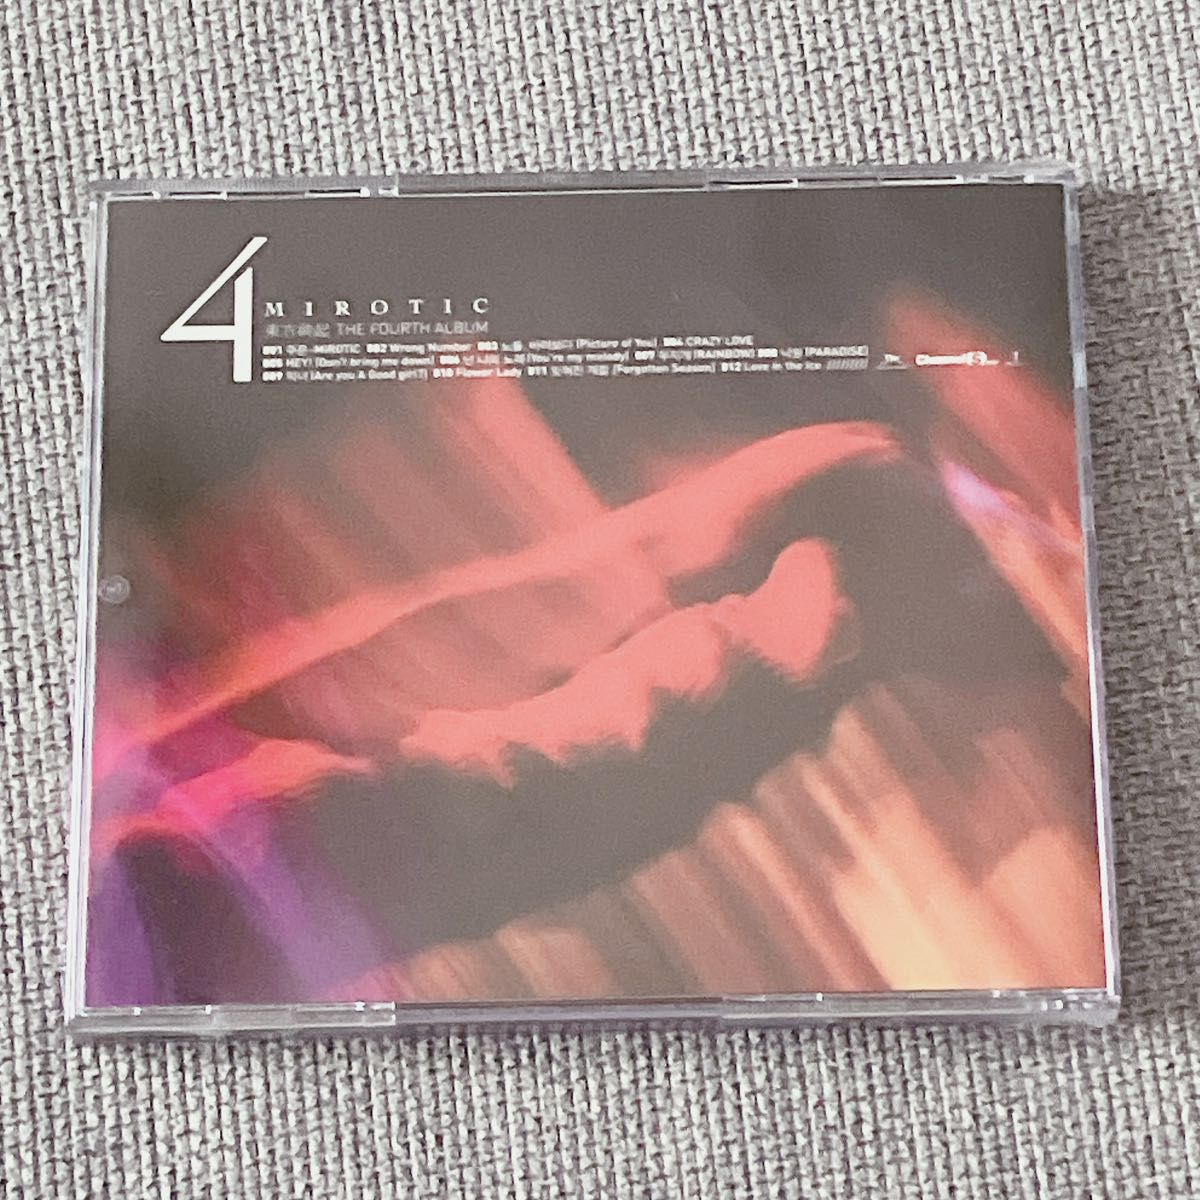 Vol.4  MIROTIC  東方神起 CD 輸入盤